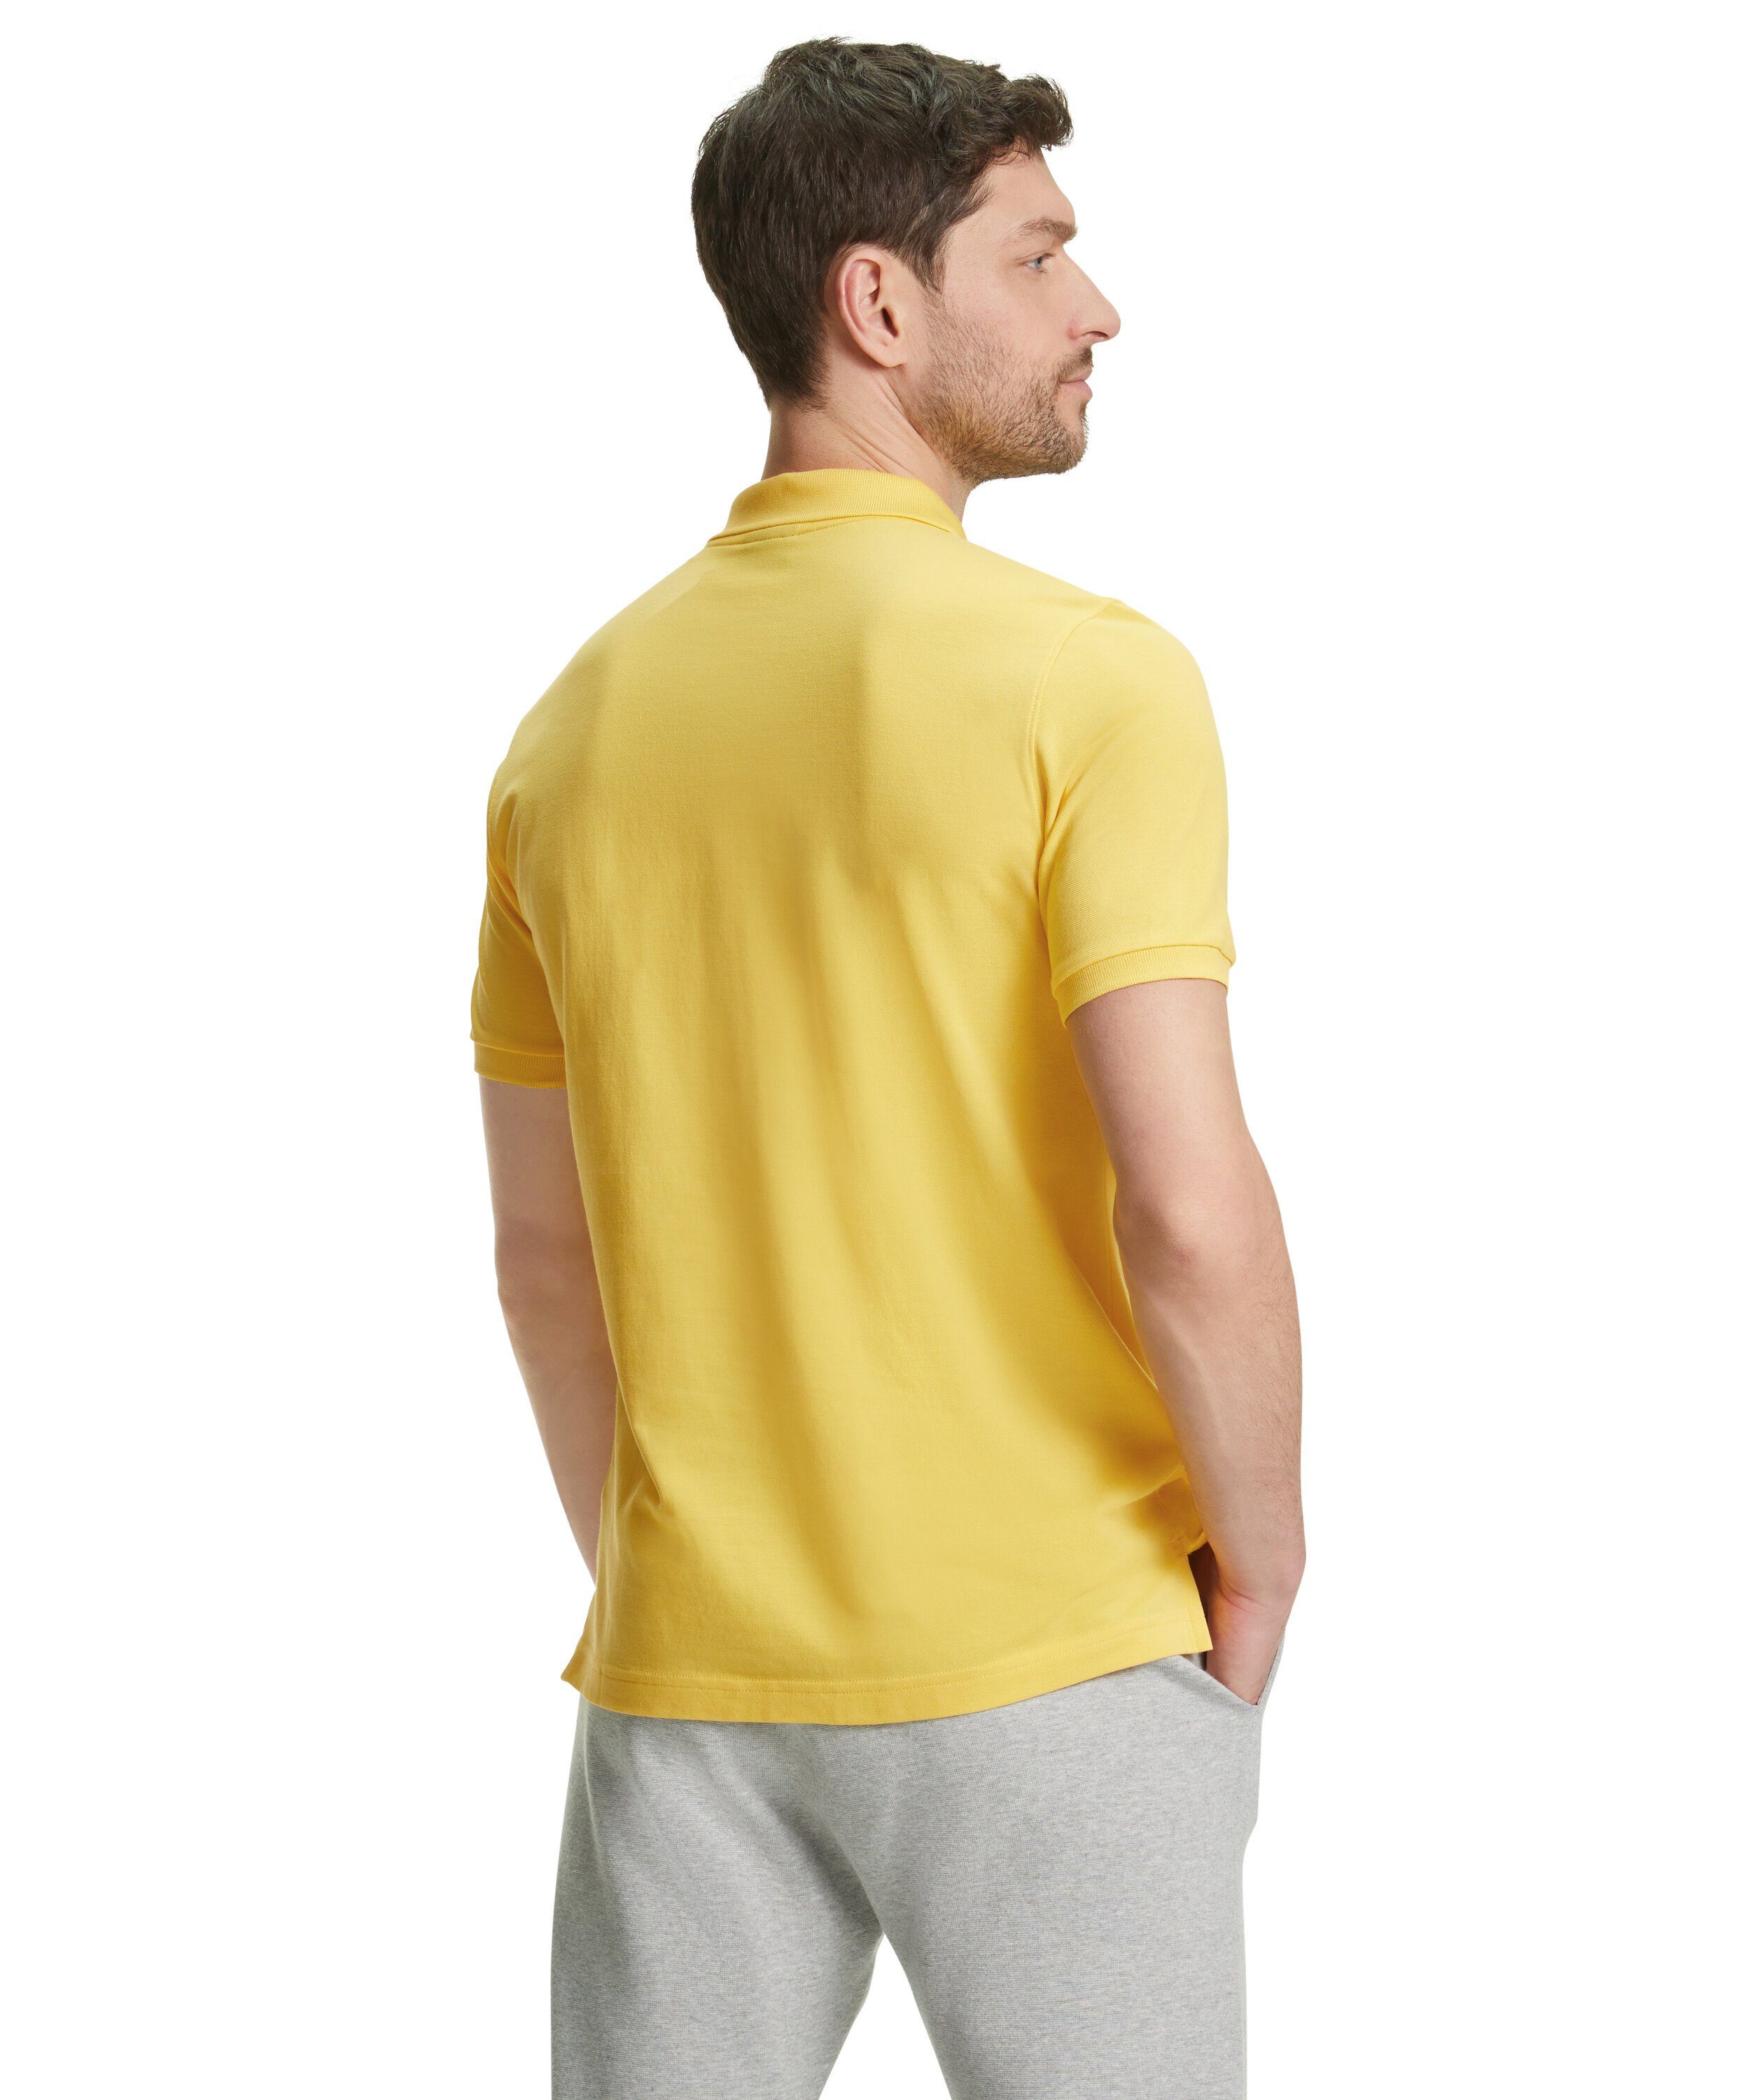 FALKE Poloshirt aus hochwertiger Pima-Baumwolle bright (1031) sun